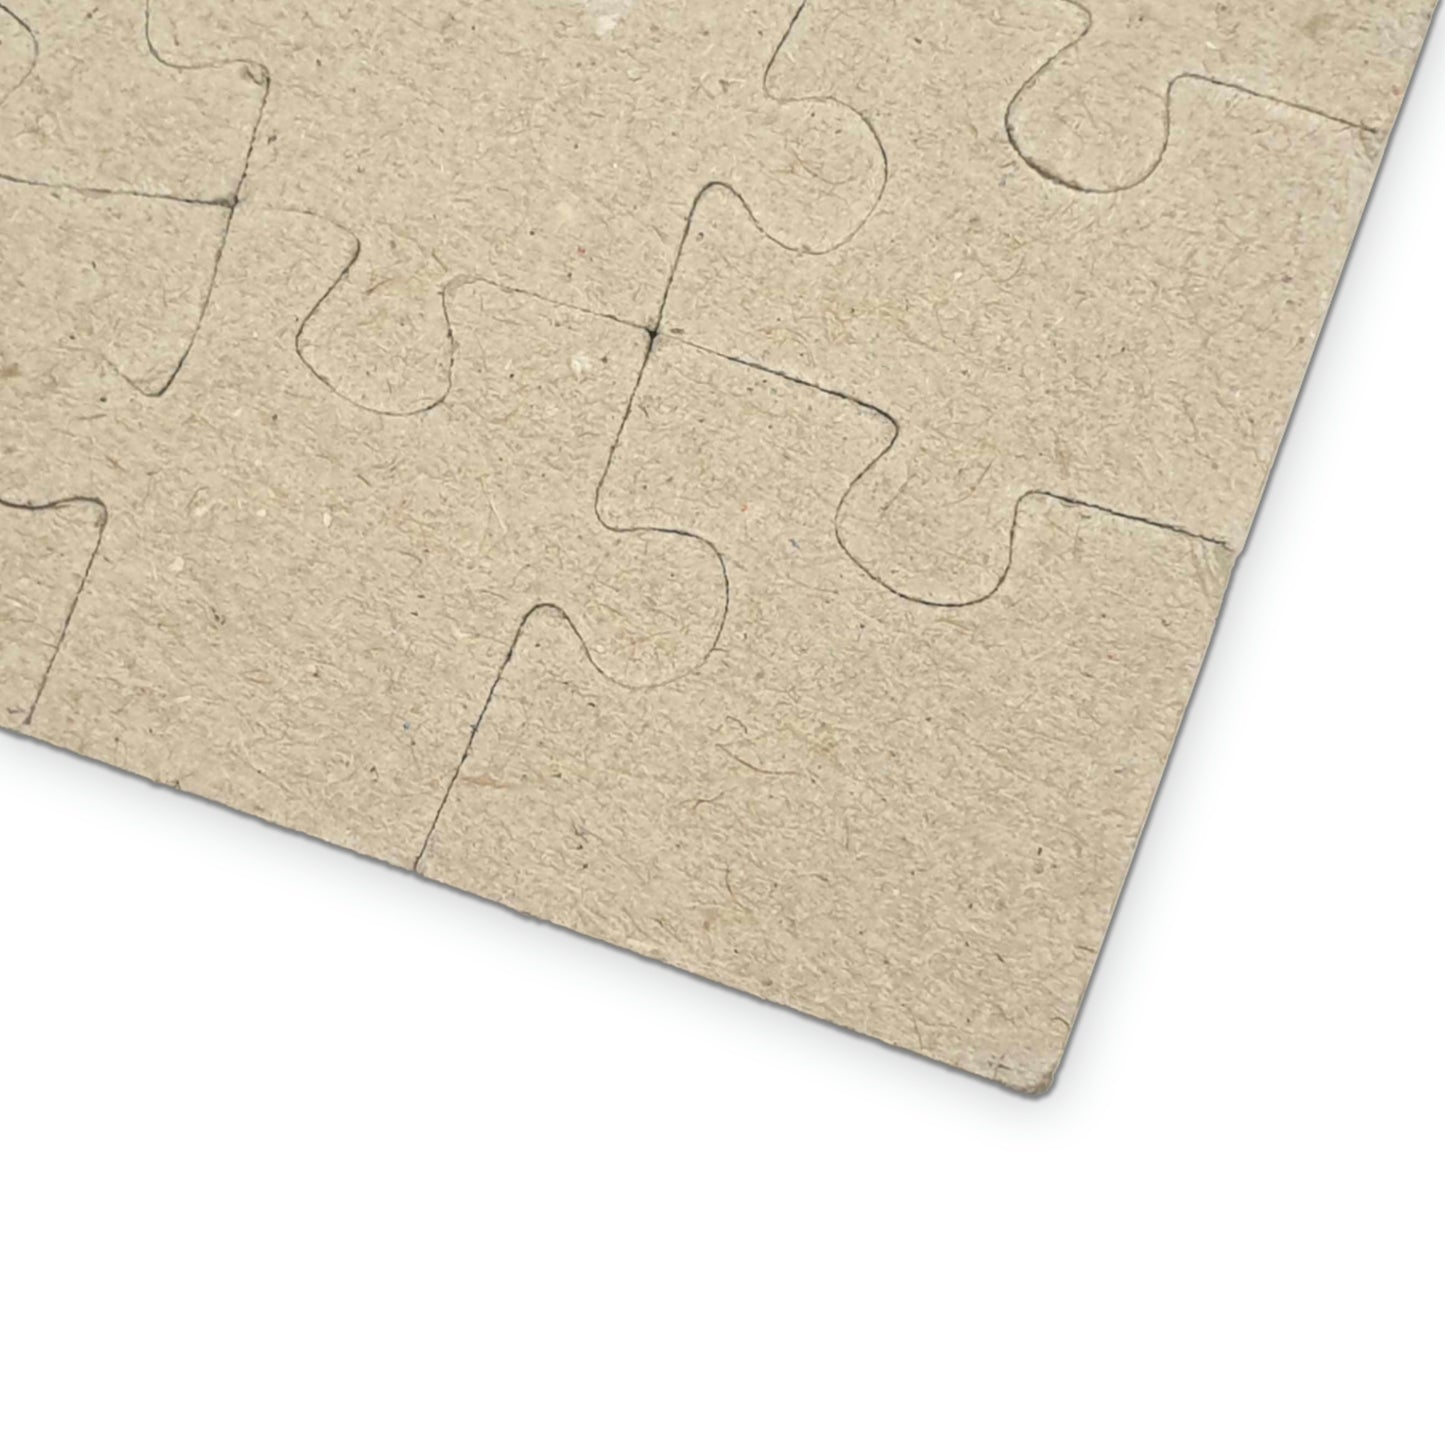 A Book For Pandora - 1000 Piece Jigsaw Puzzle